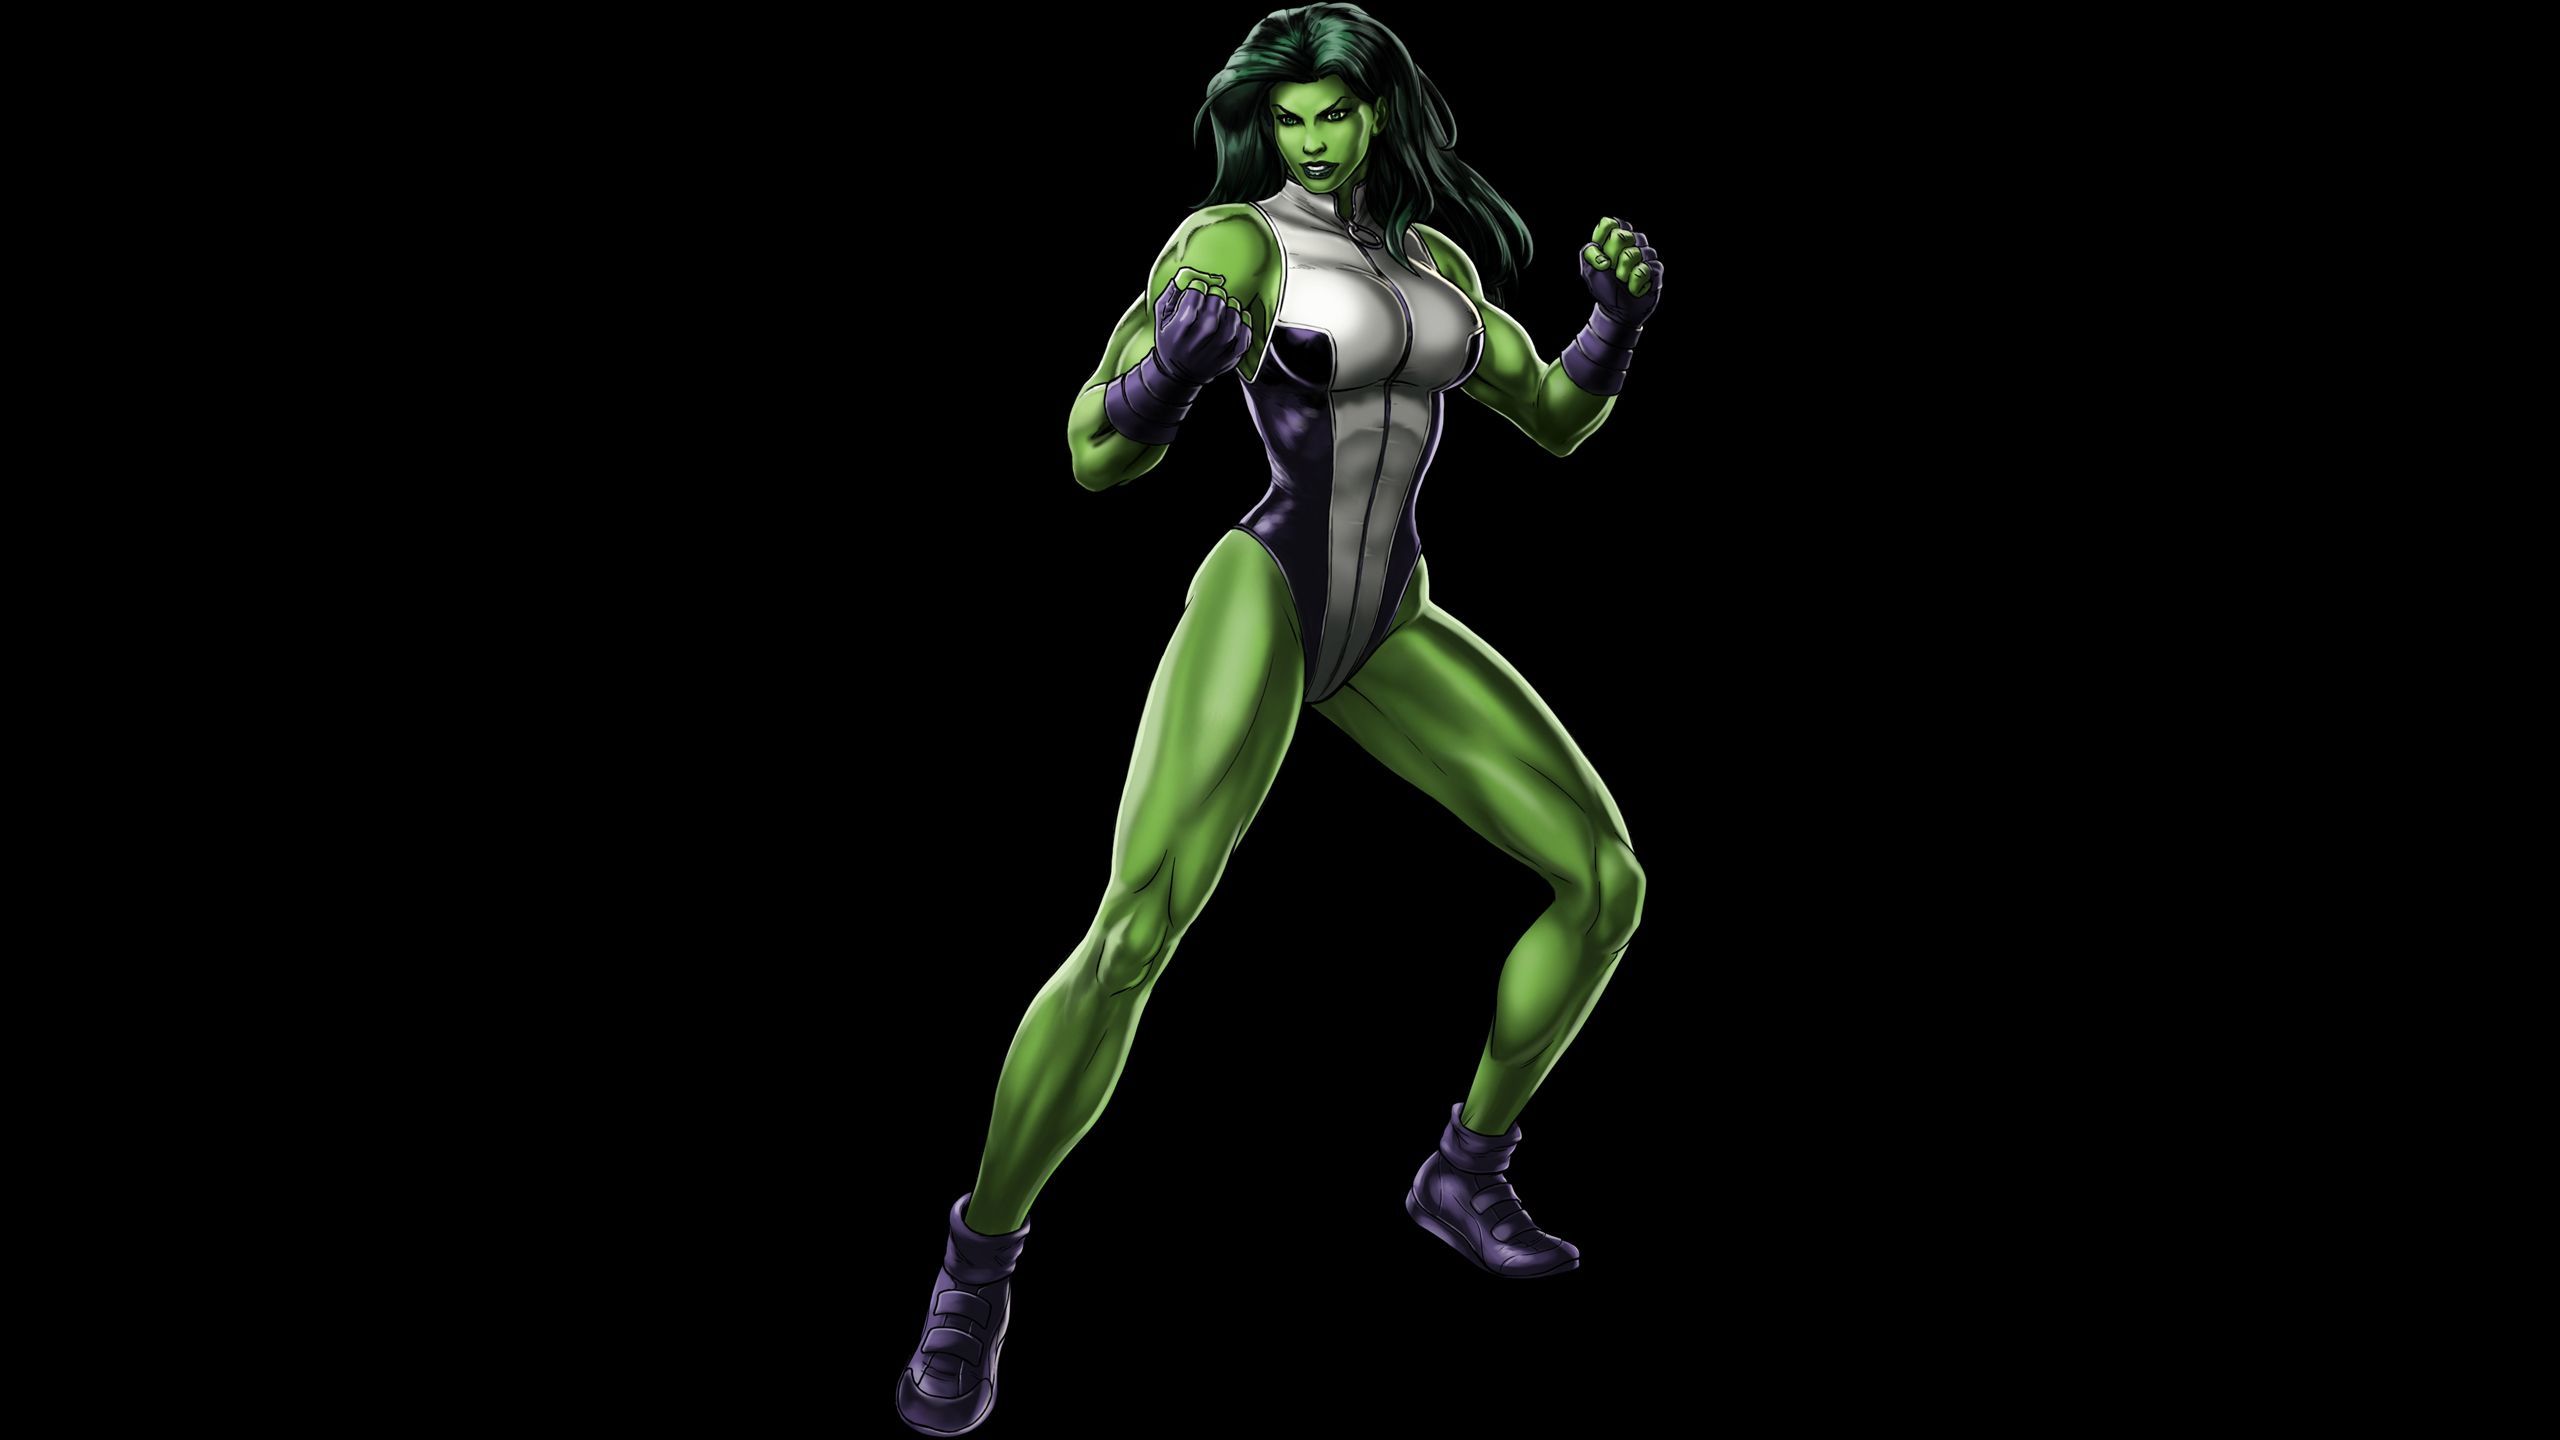 Free download Fighting She Hulk wallpaper [2560x1440] for your Desktop